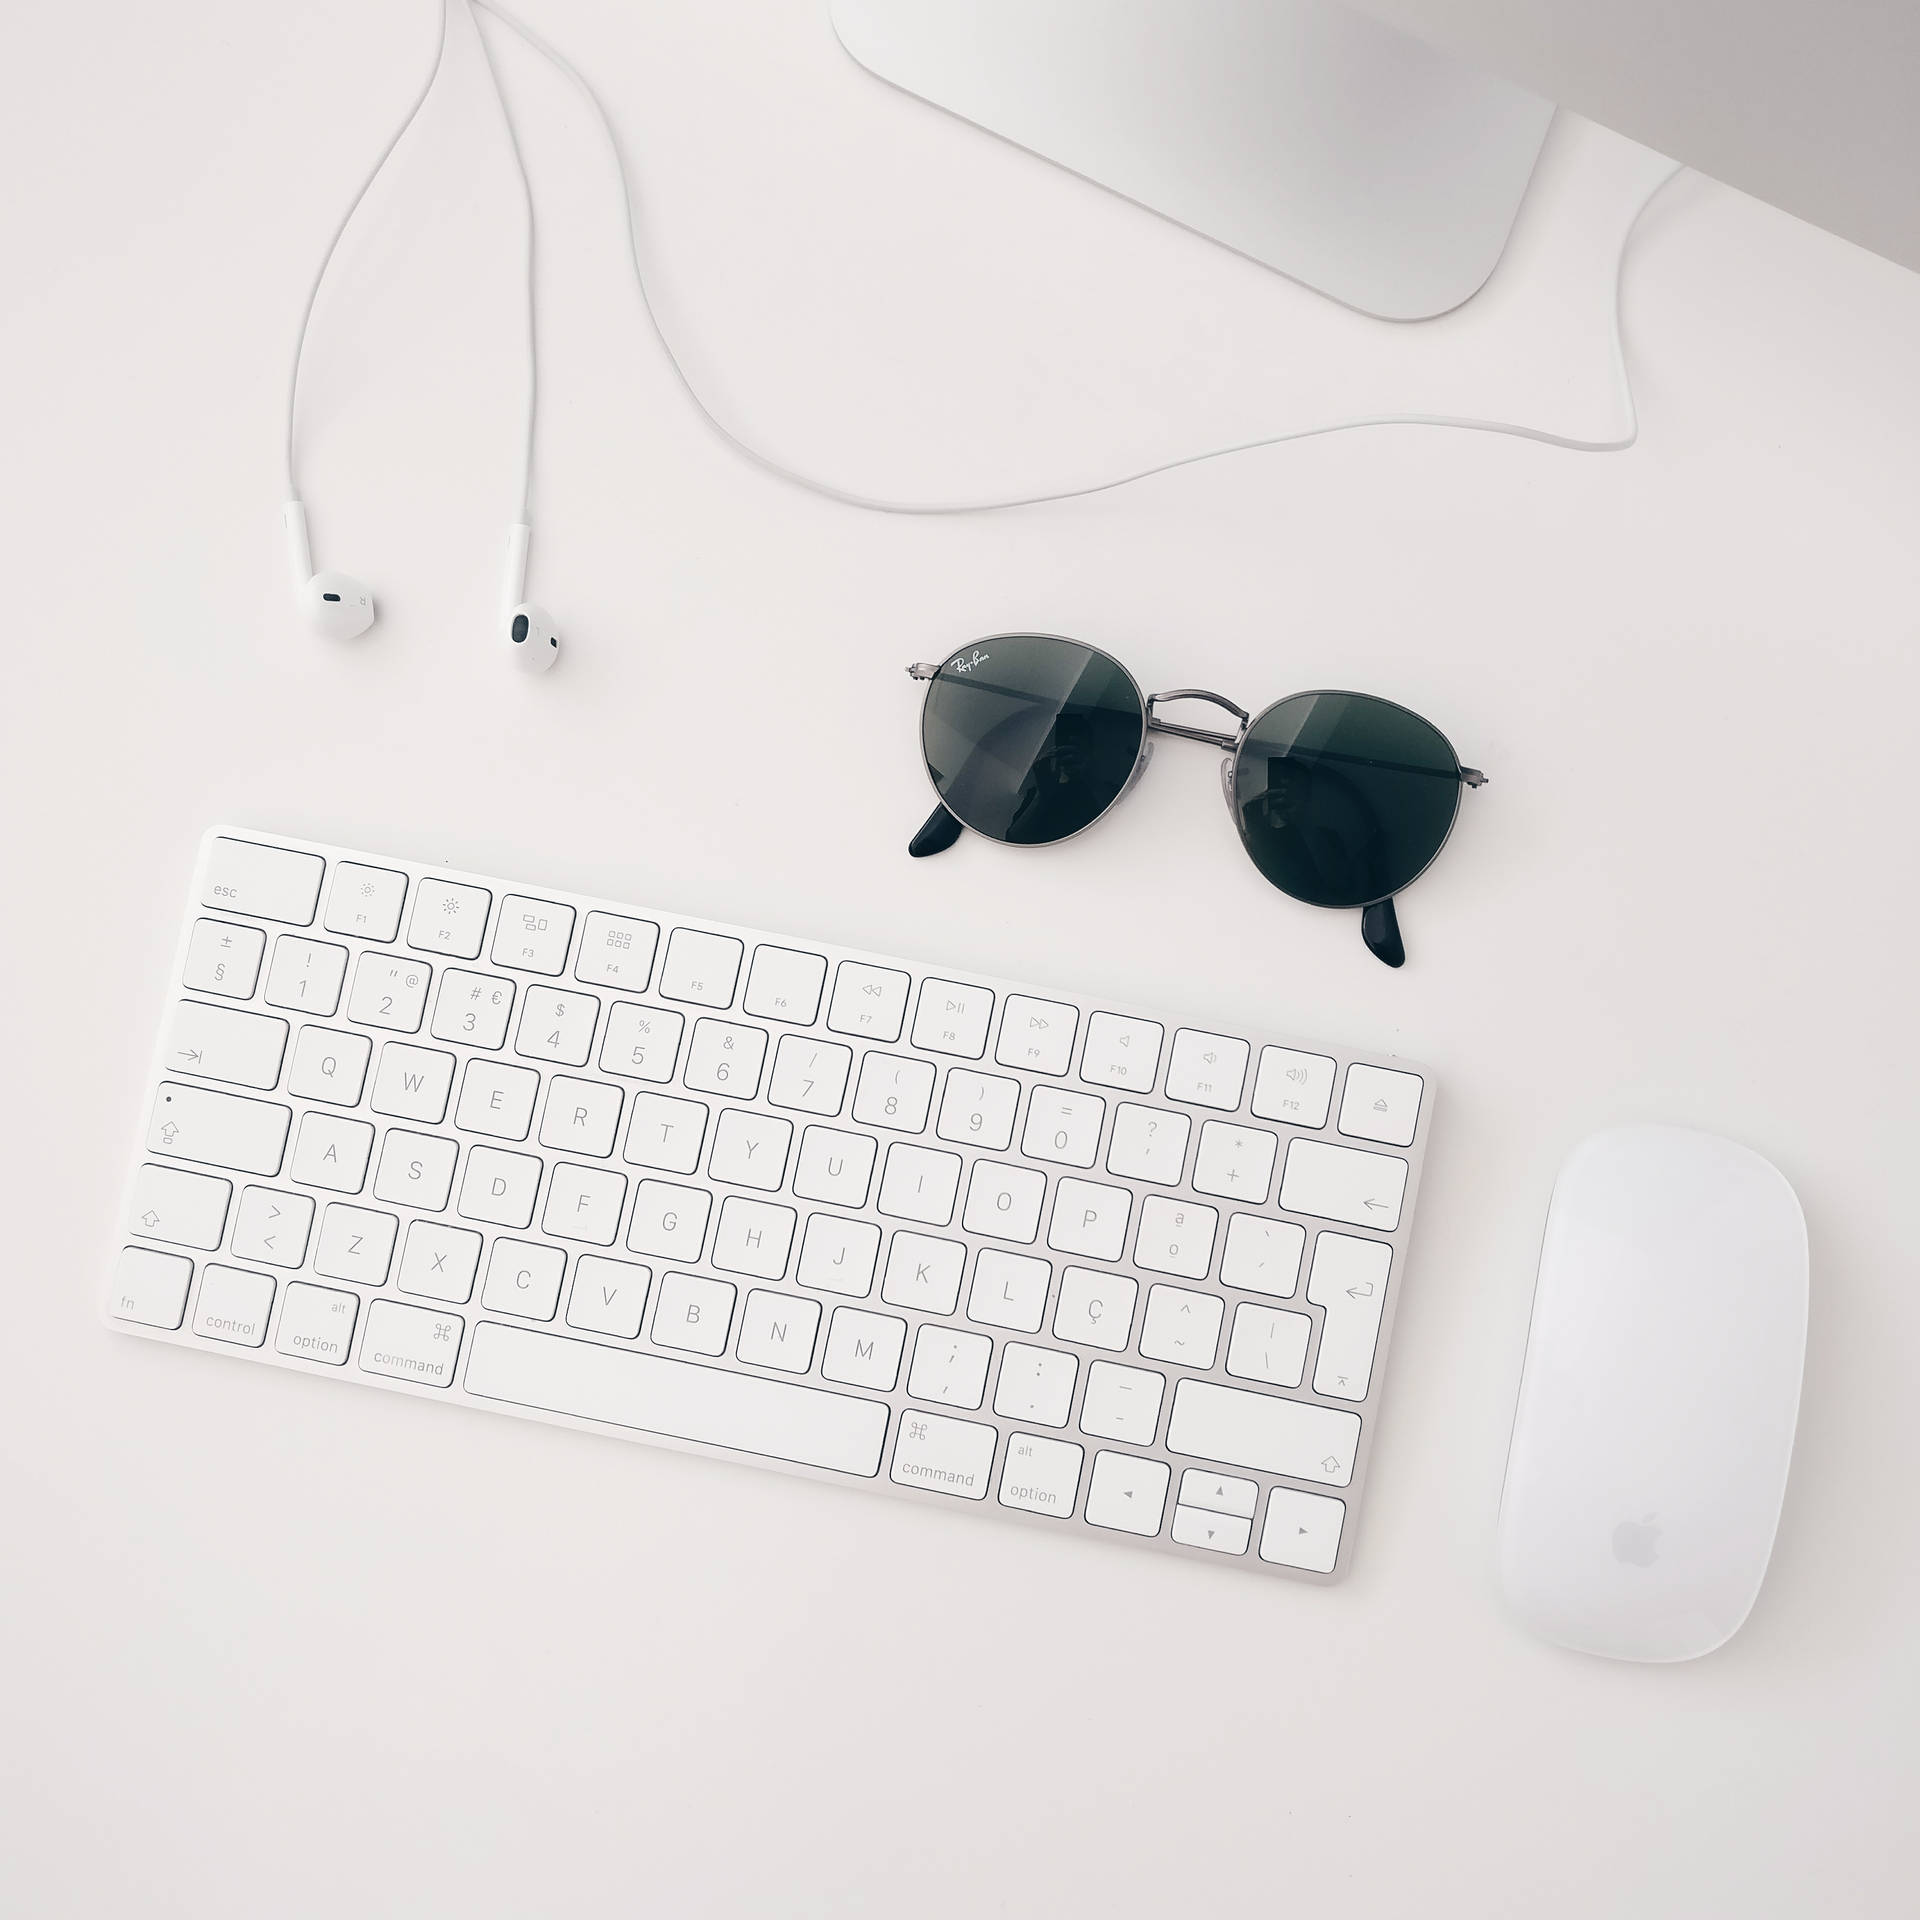 Minimalist wallpaper of white Apple MAC set-up consisting of iMAC, wireless keyboard, magic mouse and earphone.